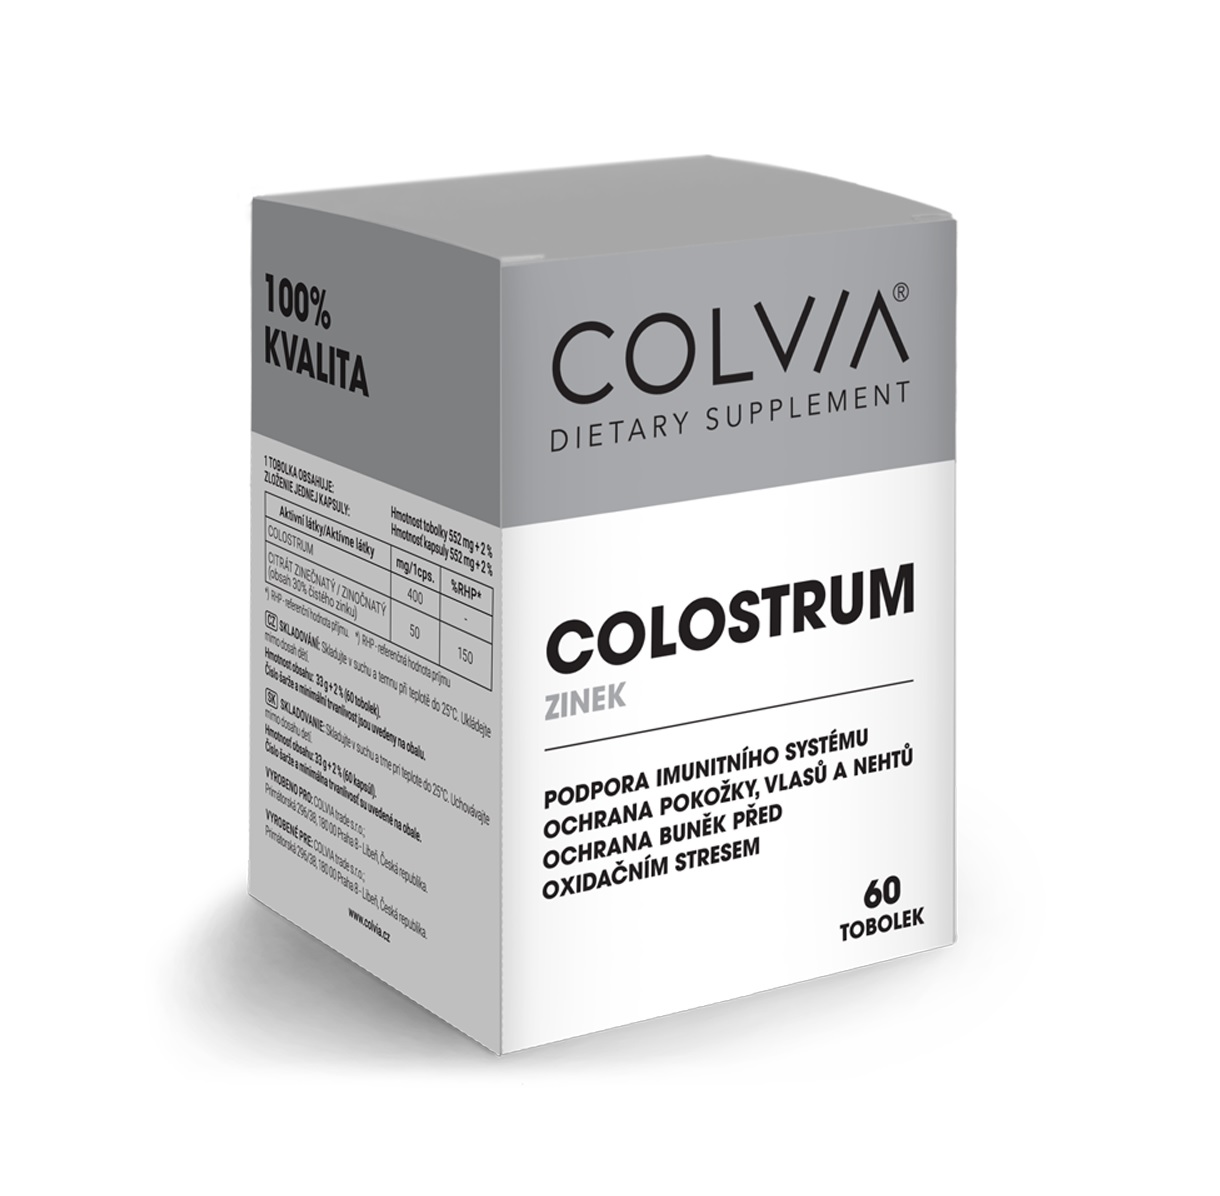 COLVIA Colostrum + Zinek 60 tobolek COLVIA